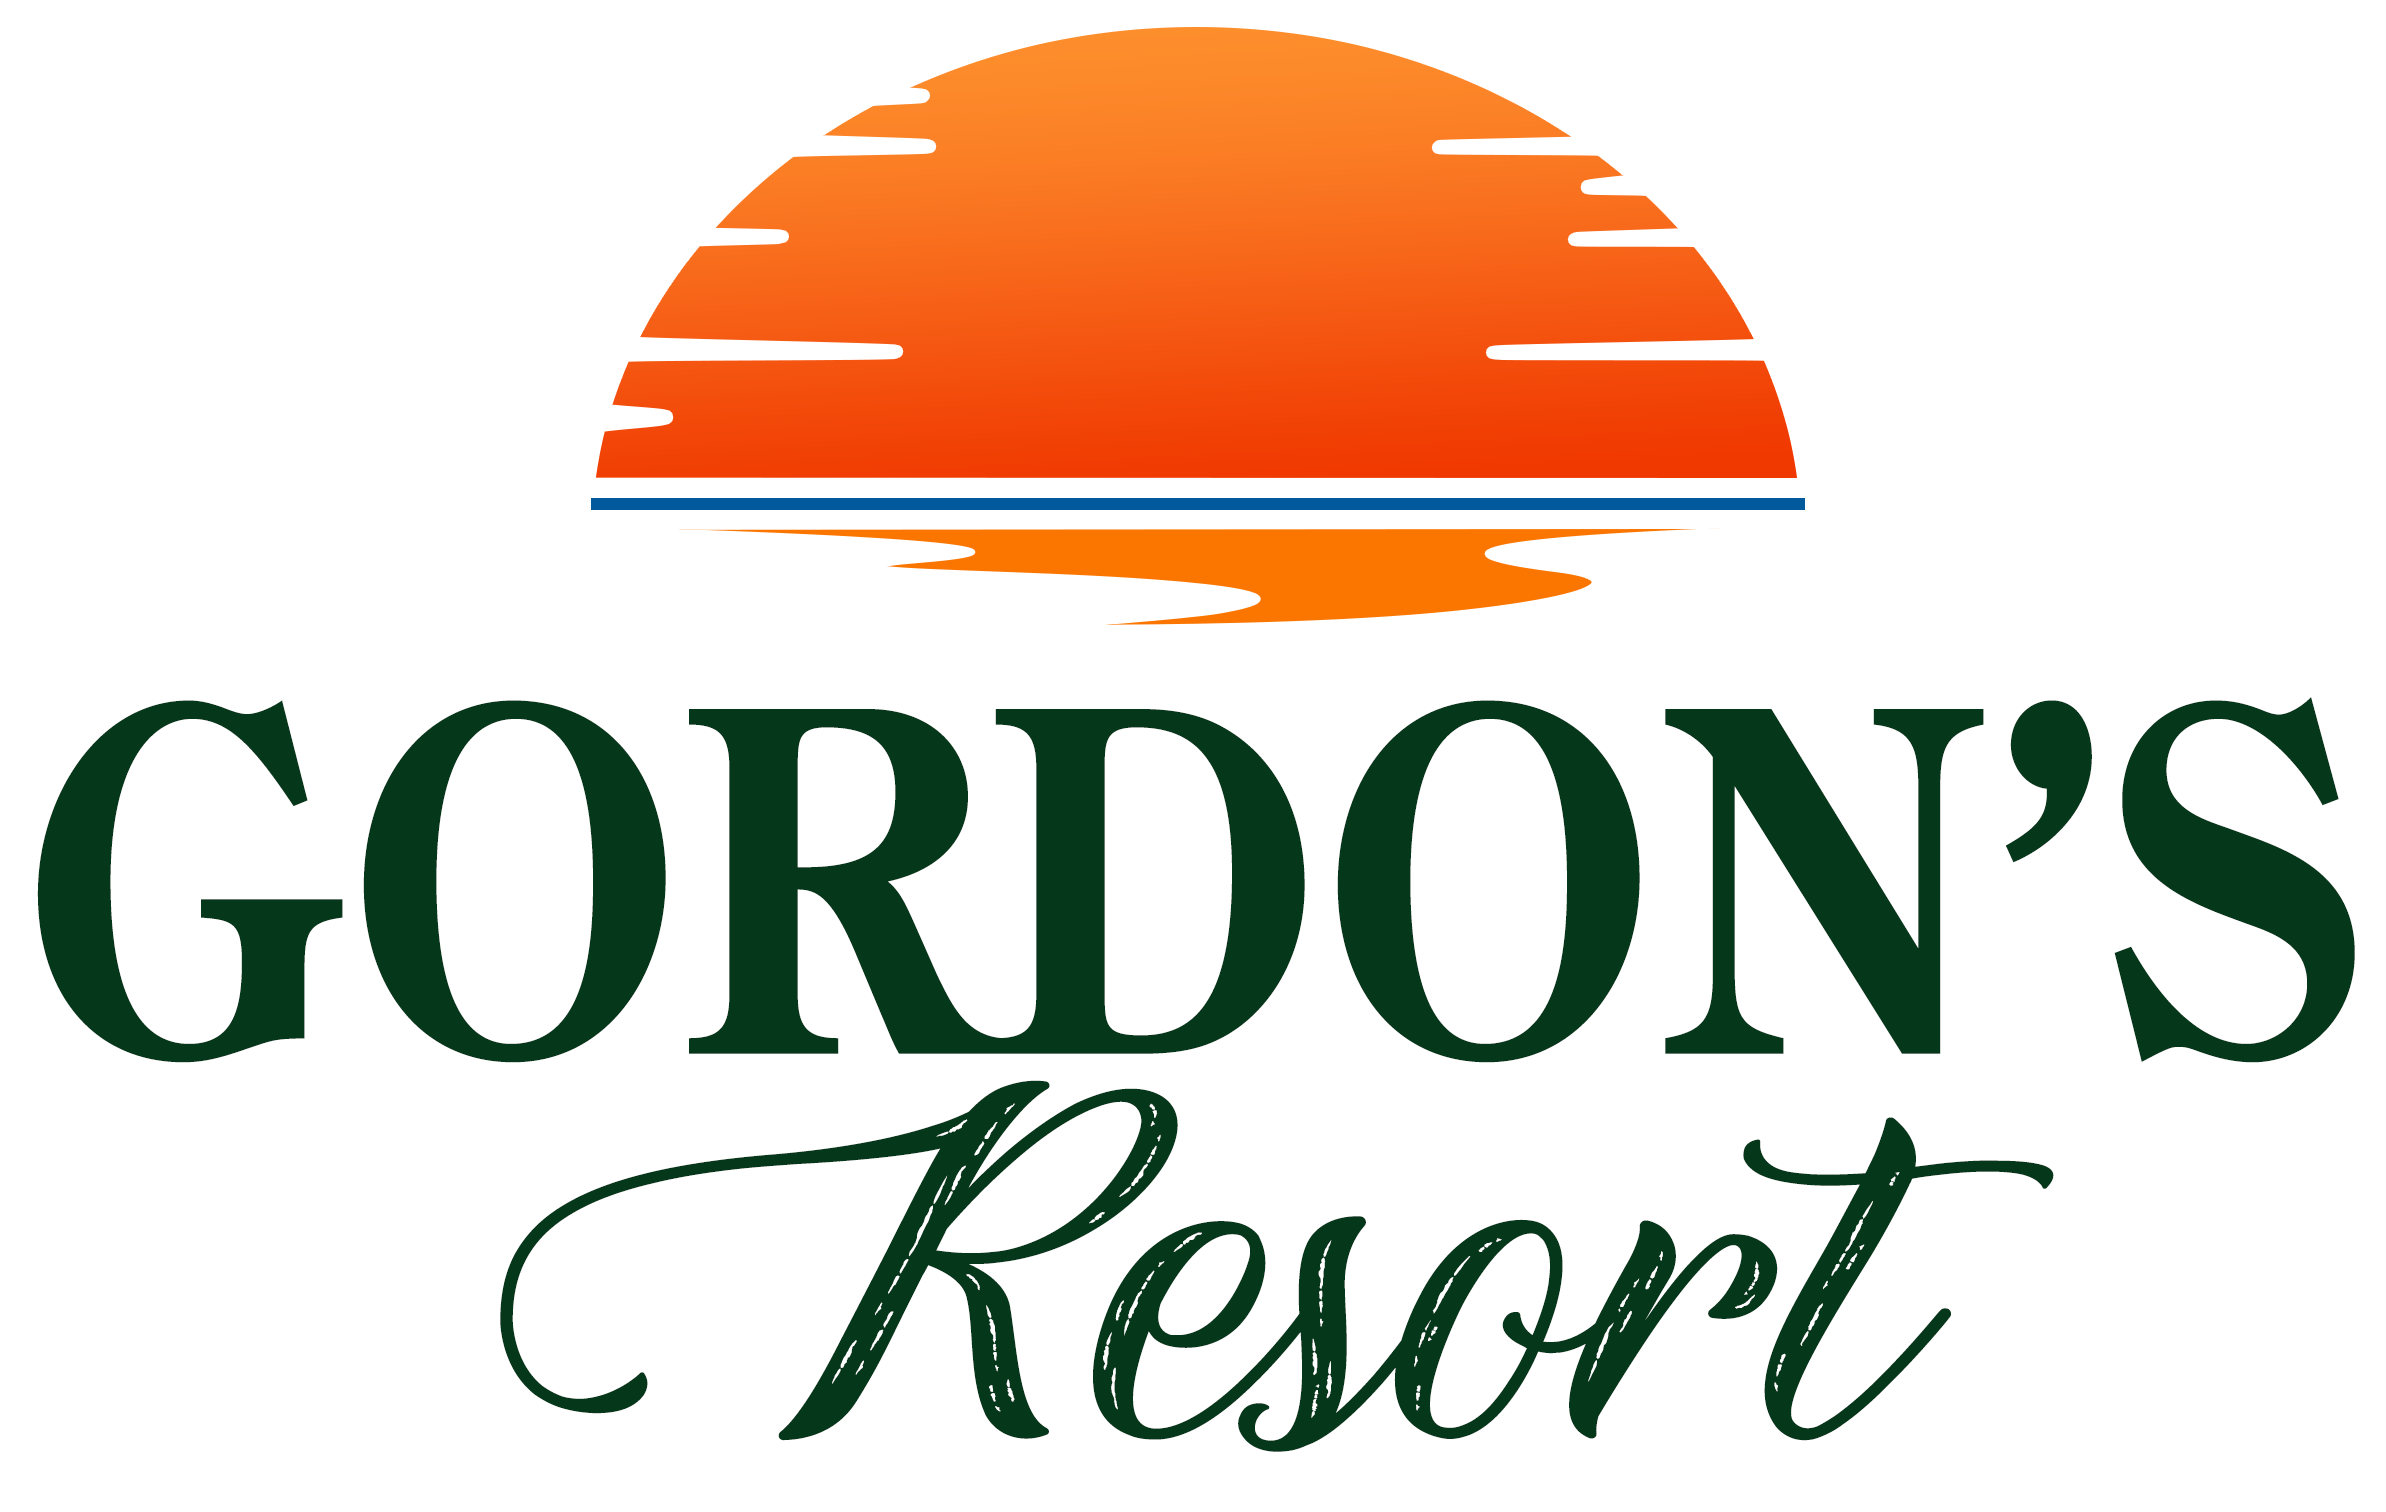 Gordon's Resort of Curtis Michigan